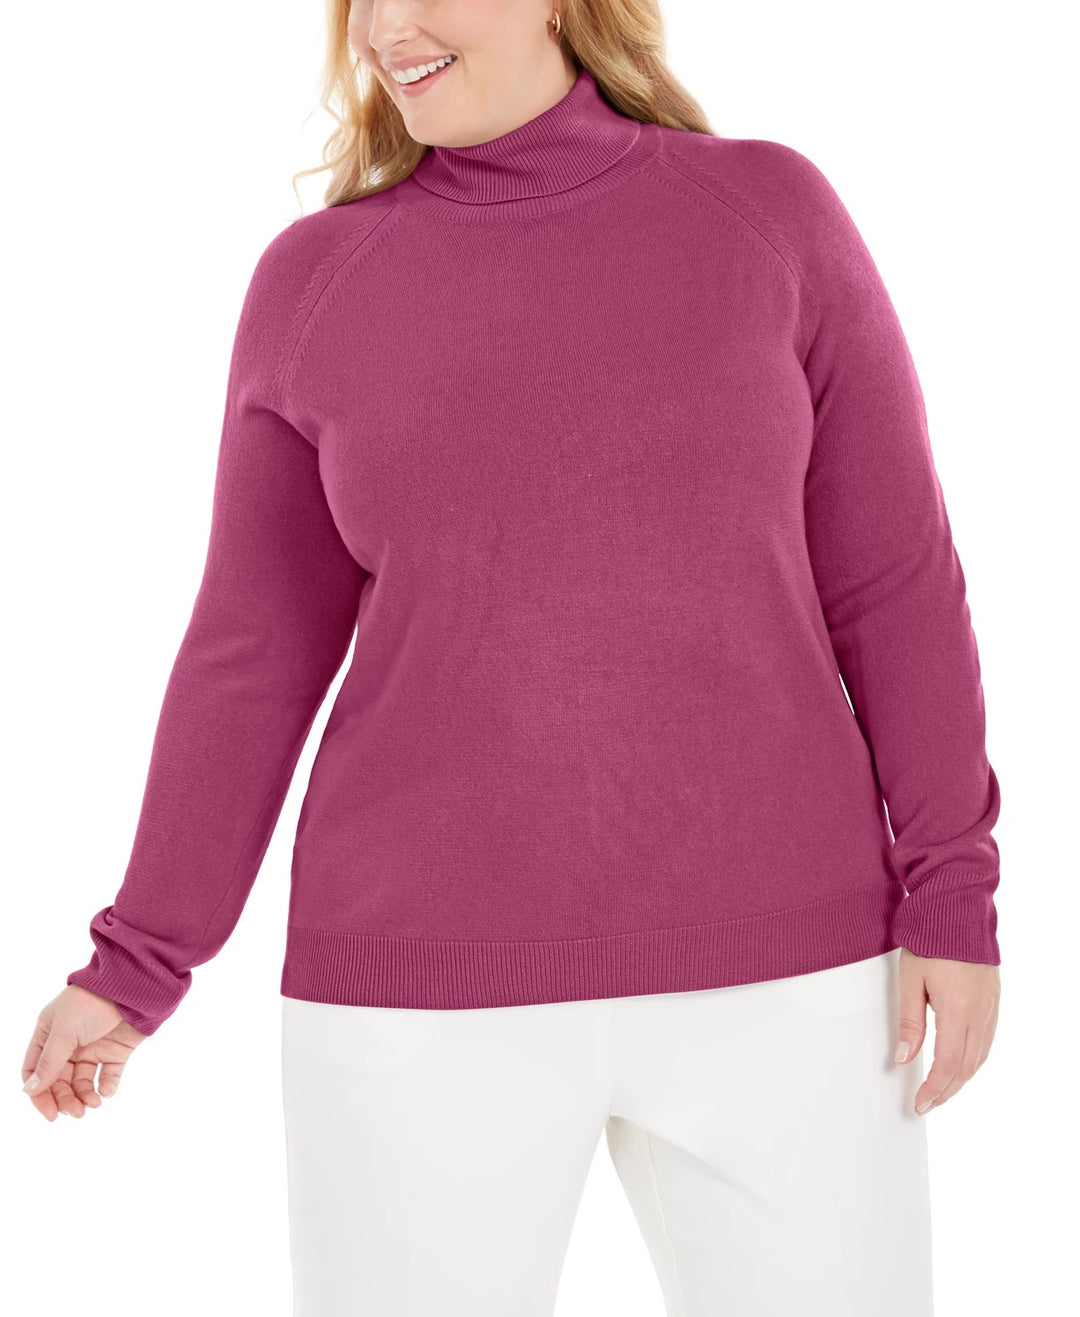 Karen Scott Women's Plus Size Turtleneck Luxsoft Sweater Purple Size 2X